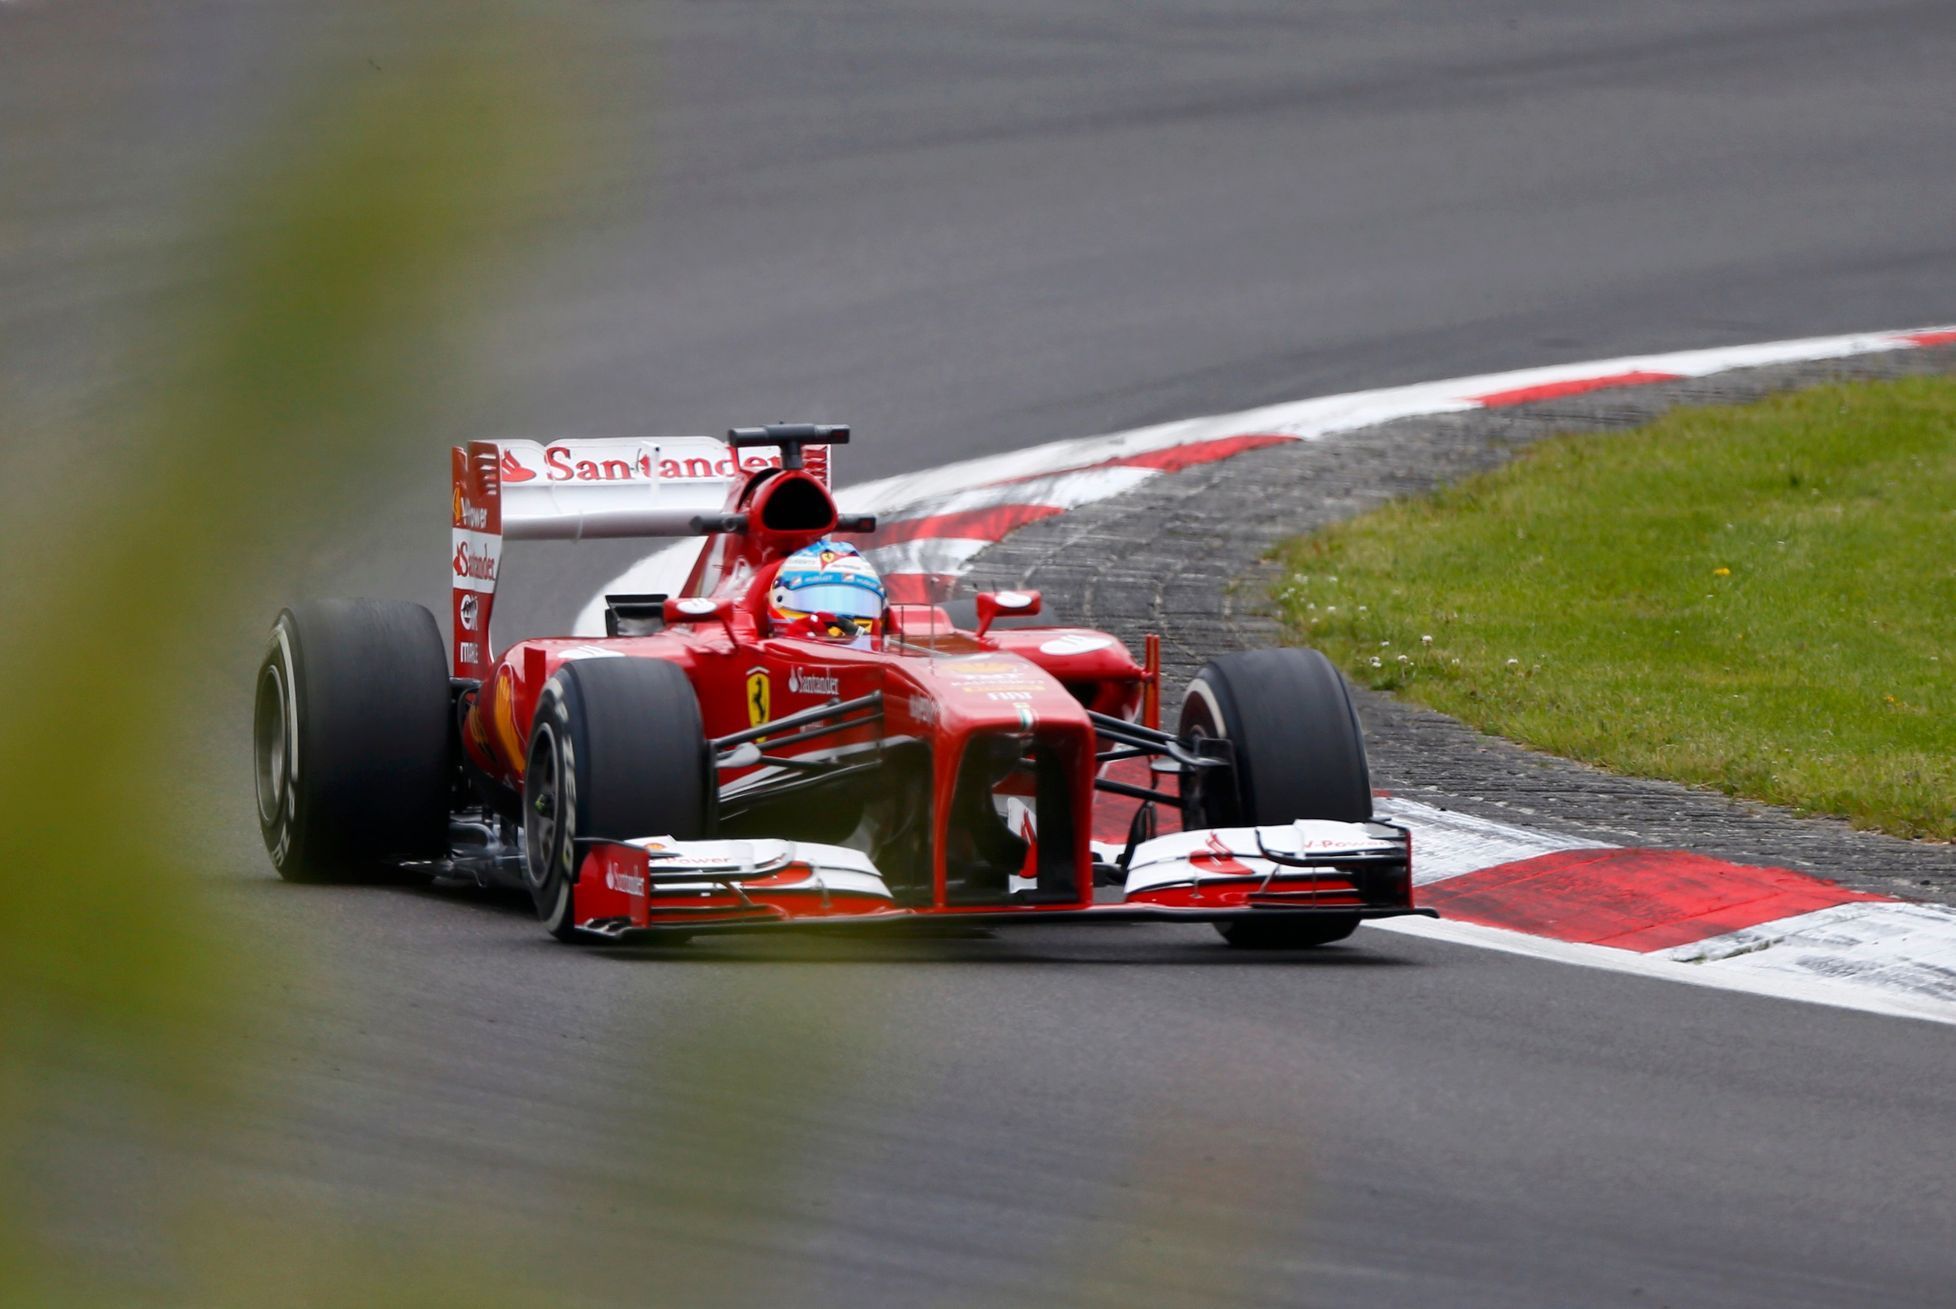 Ferrari Formula One driver Alonso takes corner during second